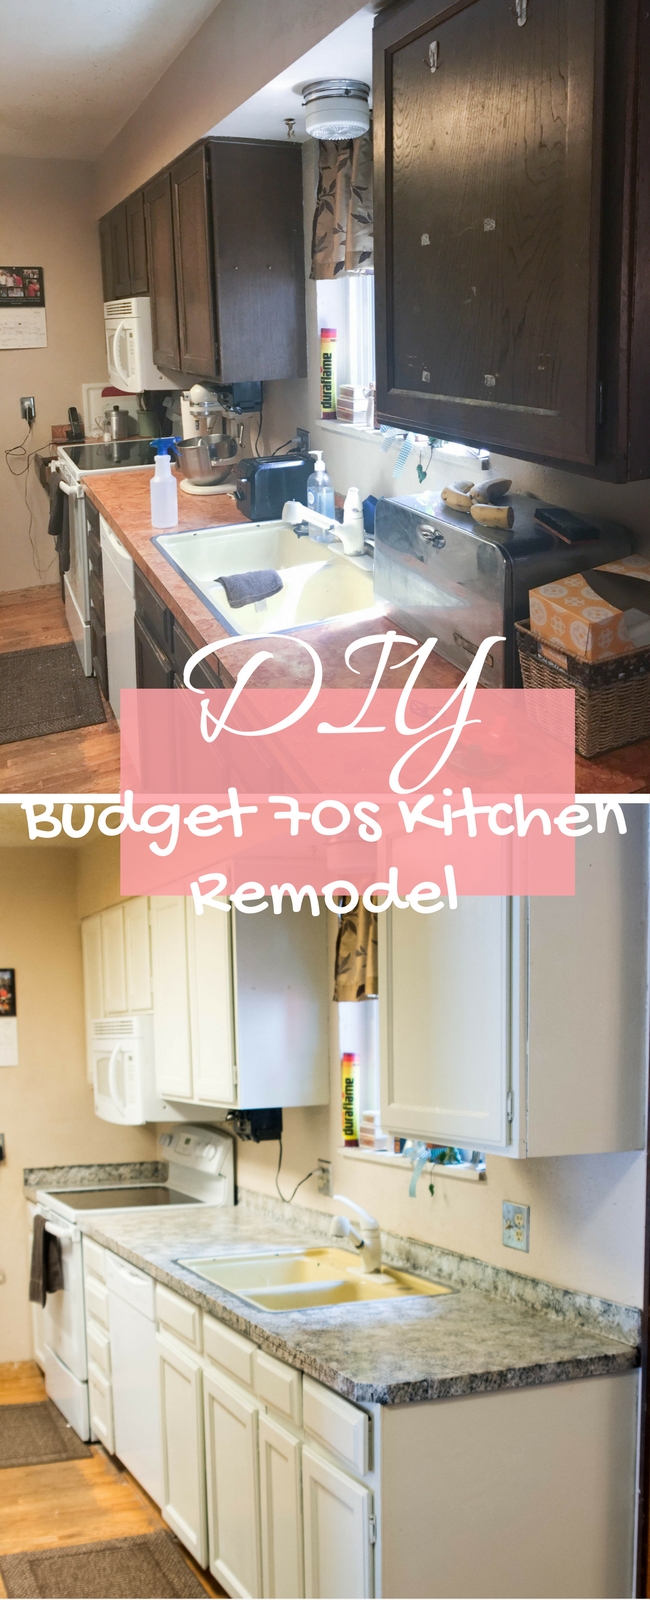 Budget 70s Kitchen Remodel